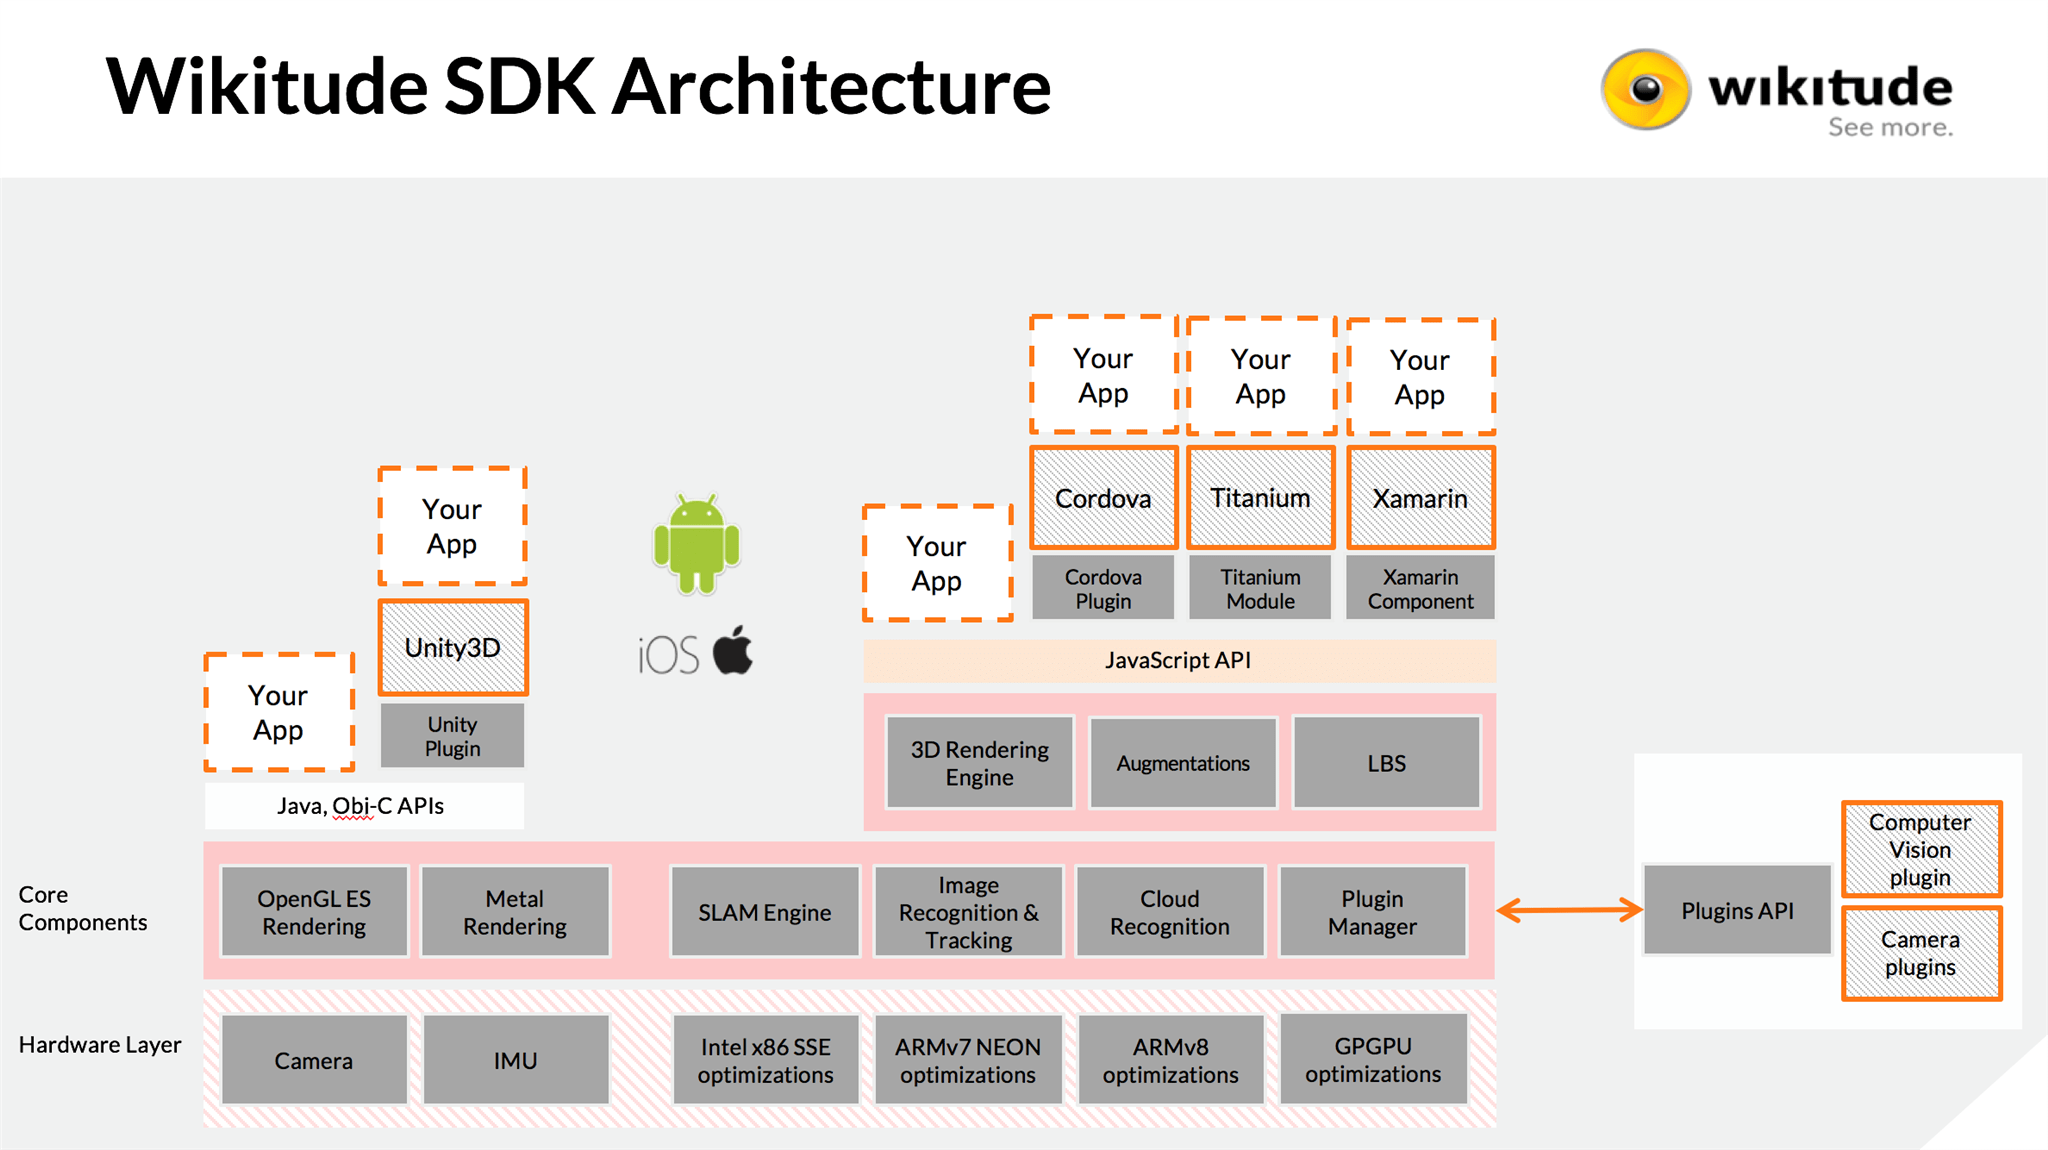 sdk7 architecture